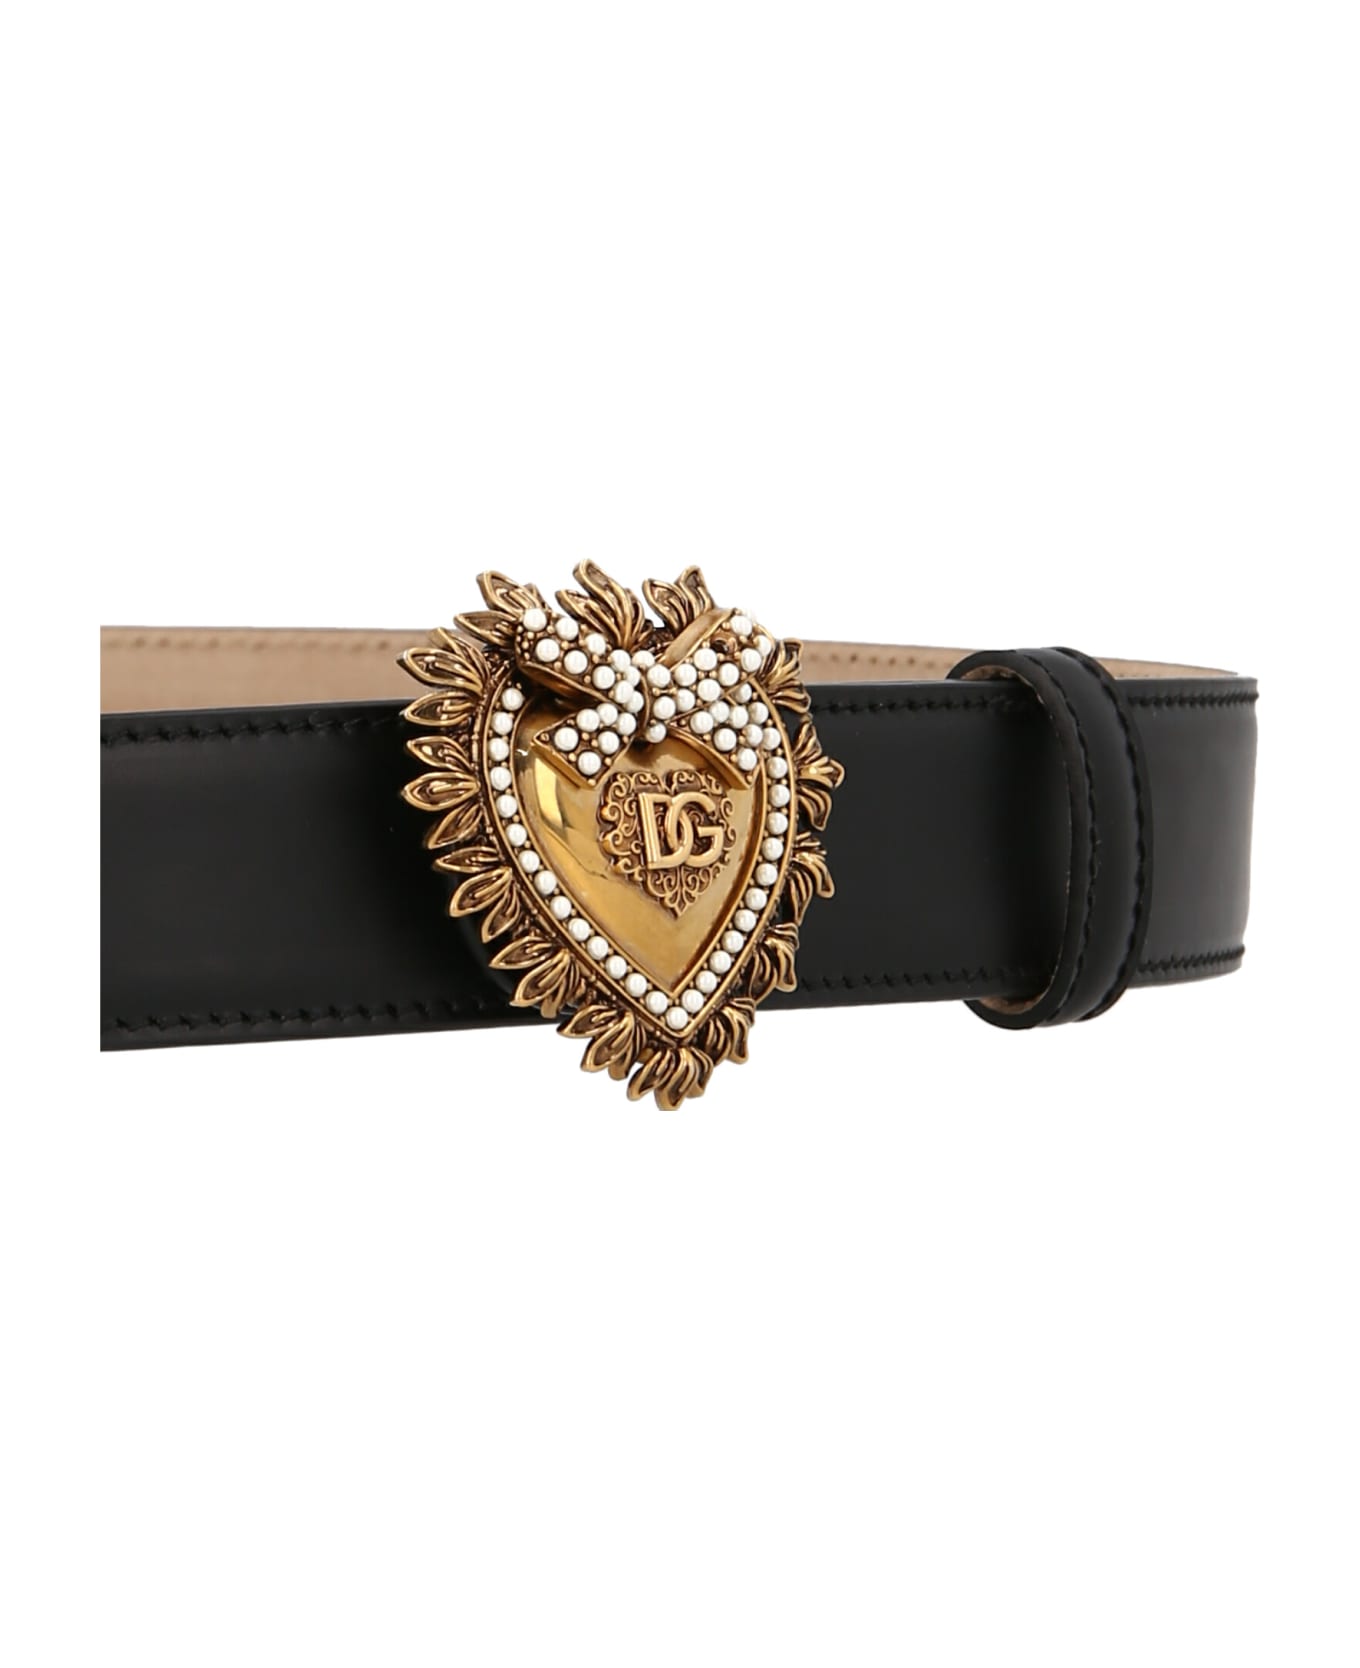 Dolce & Gabbana 'devotion' Belt - Black  